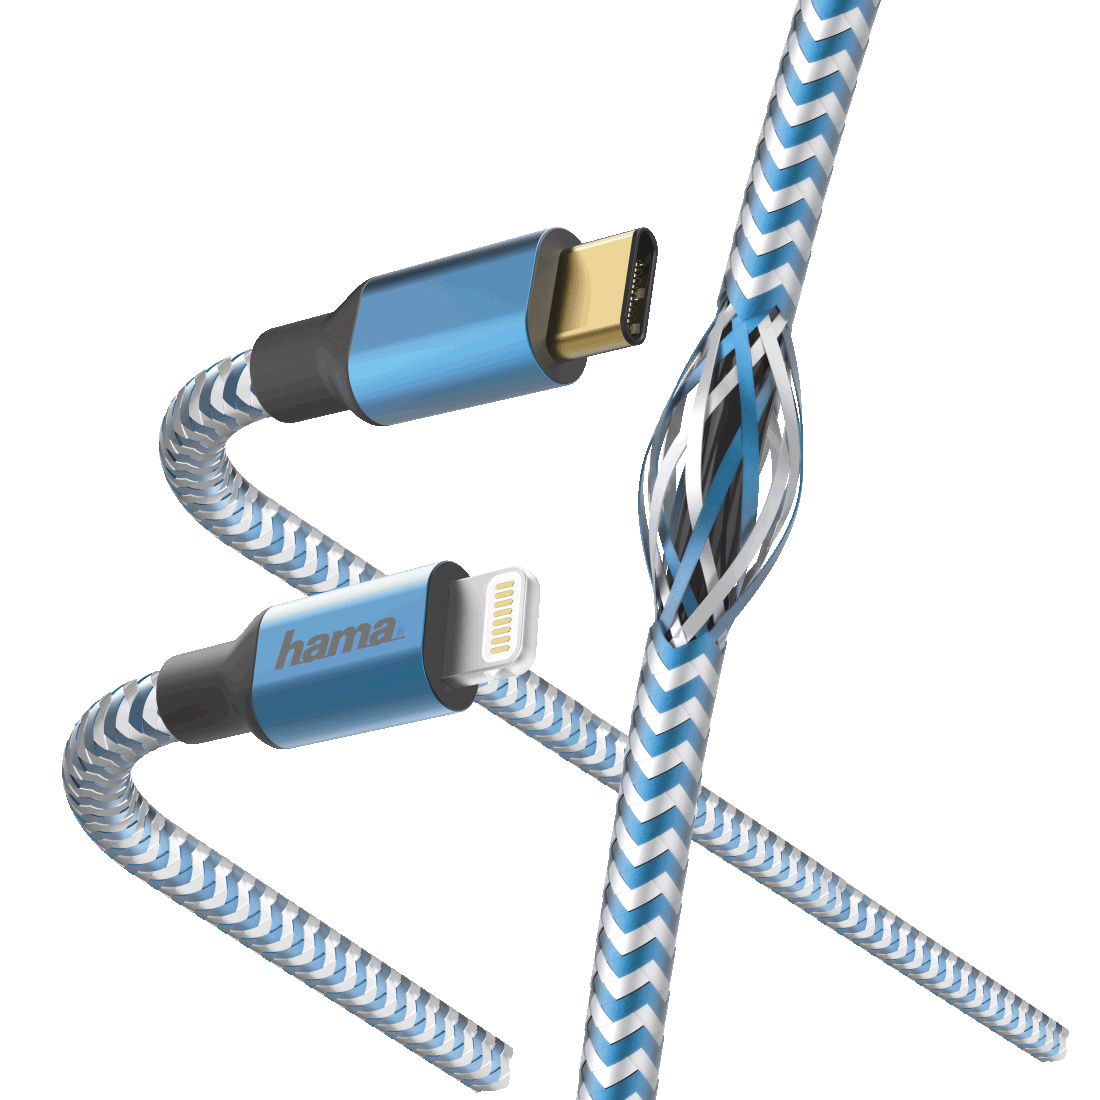 Кабель Hama 00183311 Lightning USB Type-C (m) 1.5м синий кабель lightning type c 1 5м hama 00183311 круглый синий